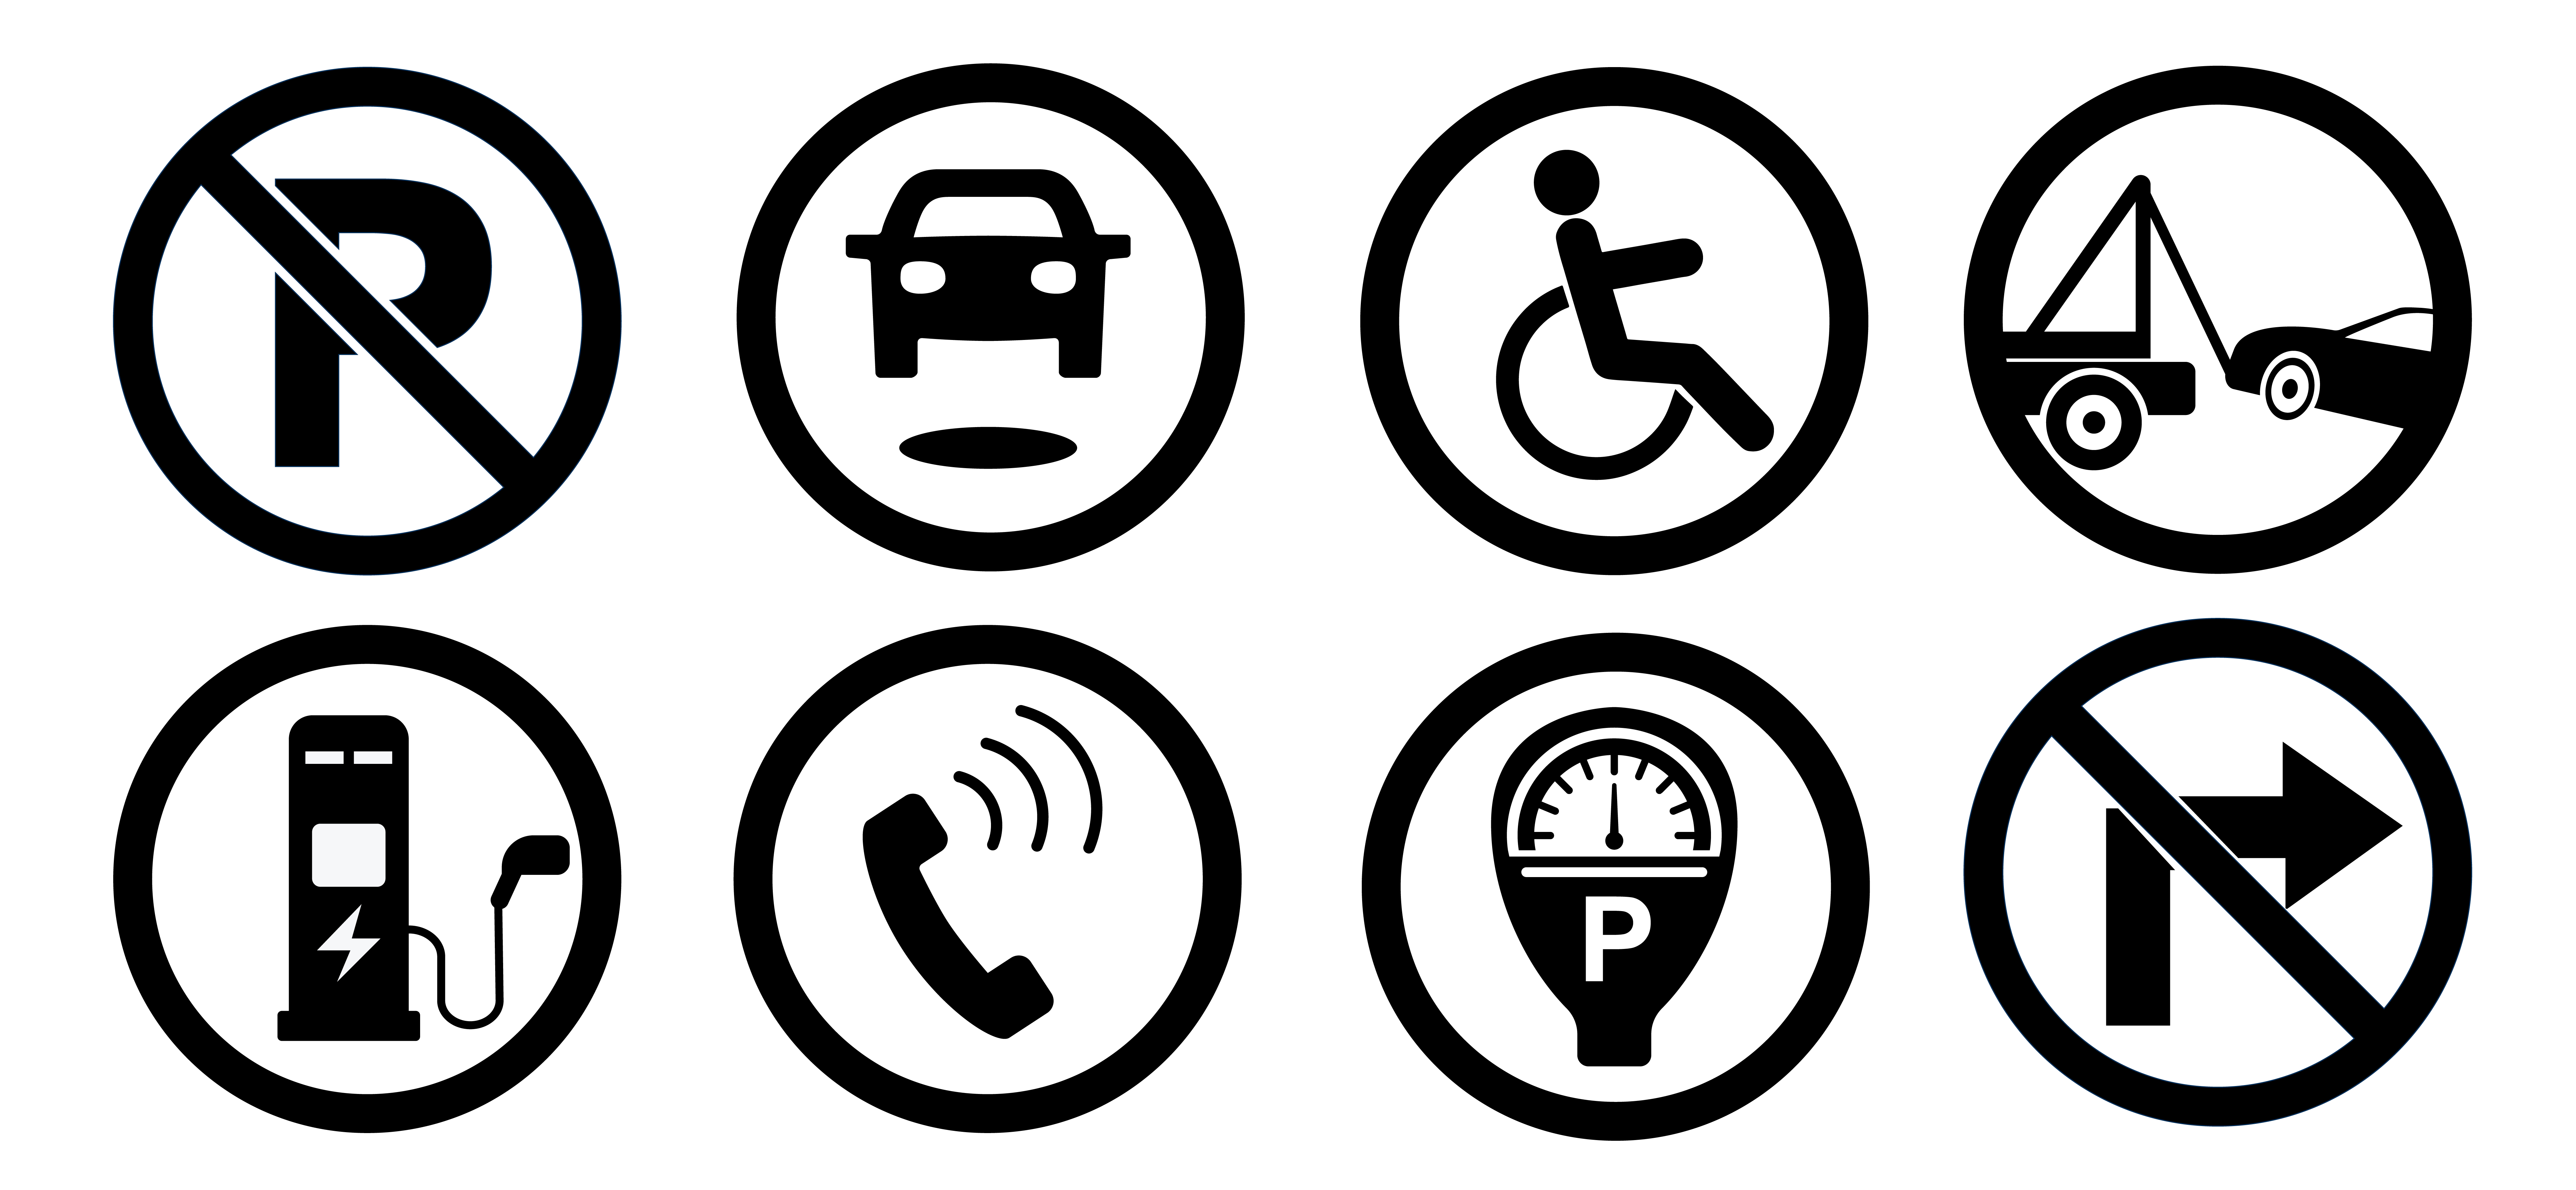 Mind your P’s and Q’s: SpotHero’s Essential Parking Etiquette